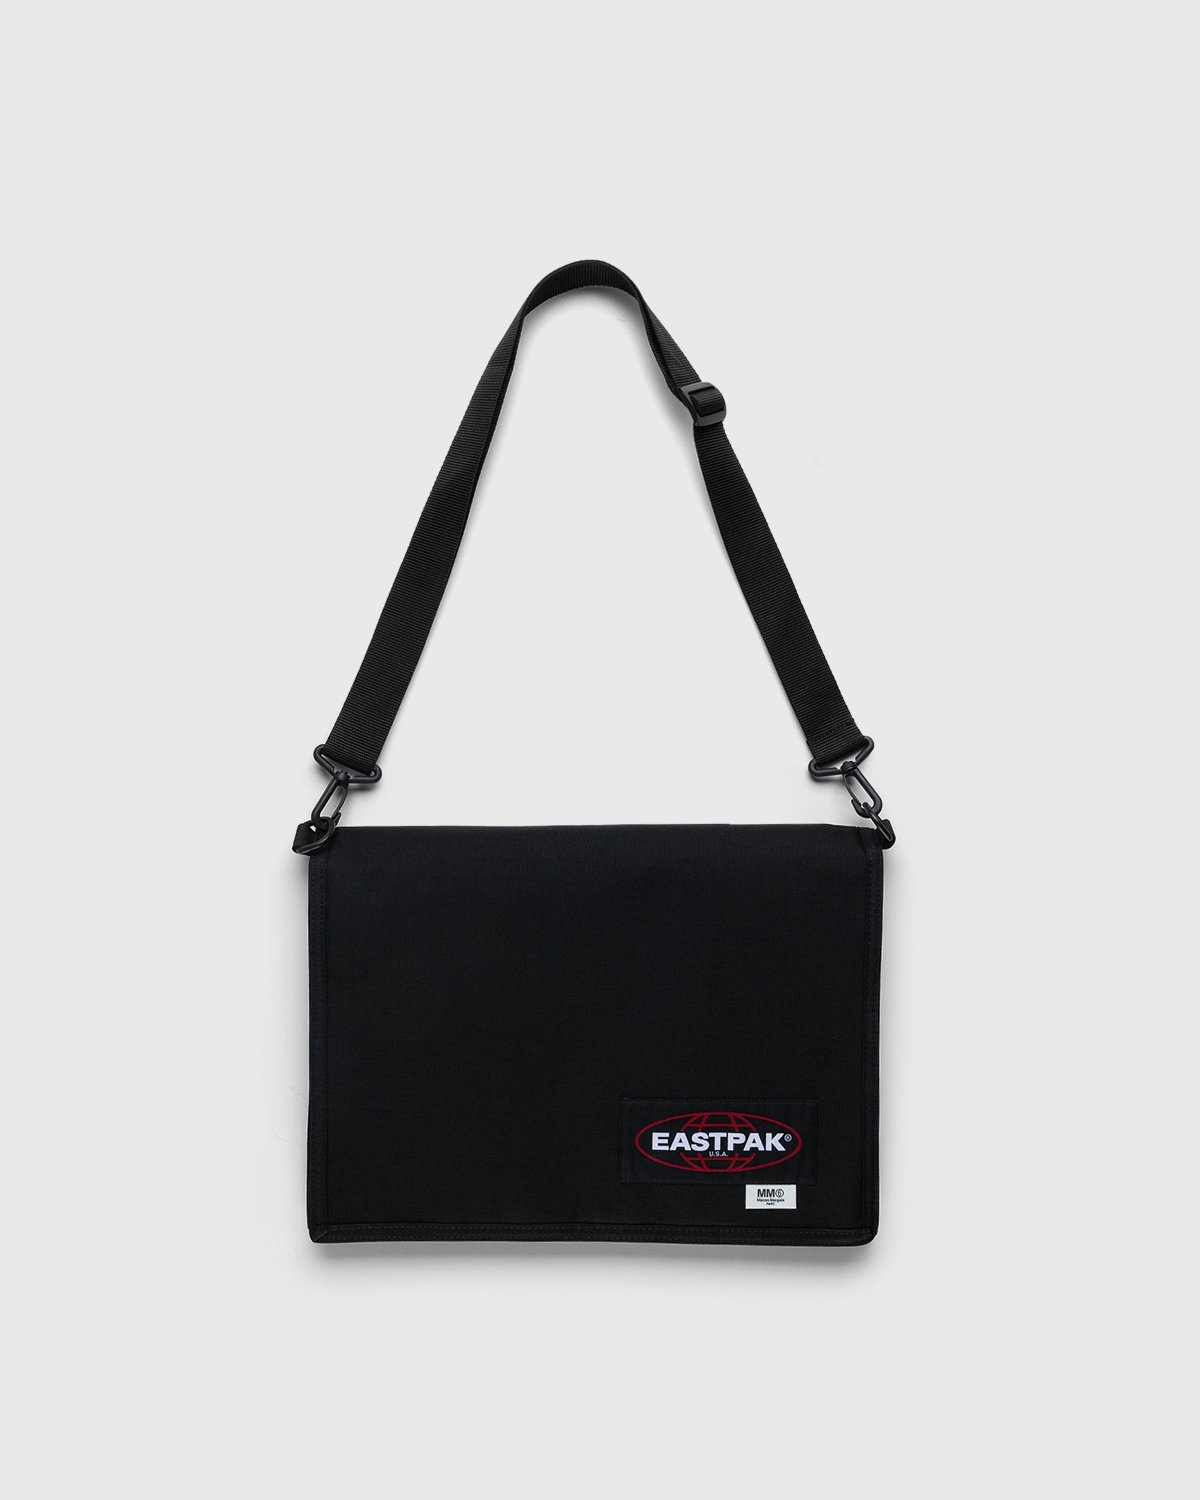 MM6 Maison Margiela x Eastpak – Borsa Tracolla Shoulder Bag Black - Bags - Black - Image 1